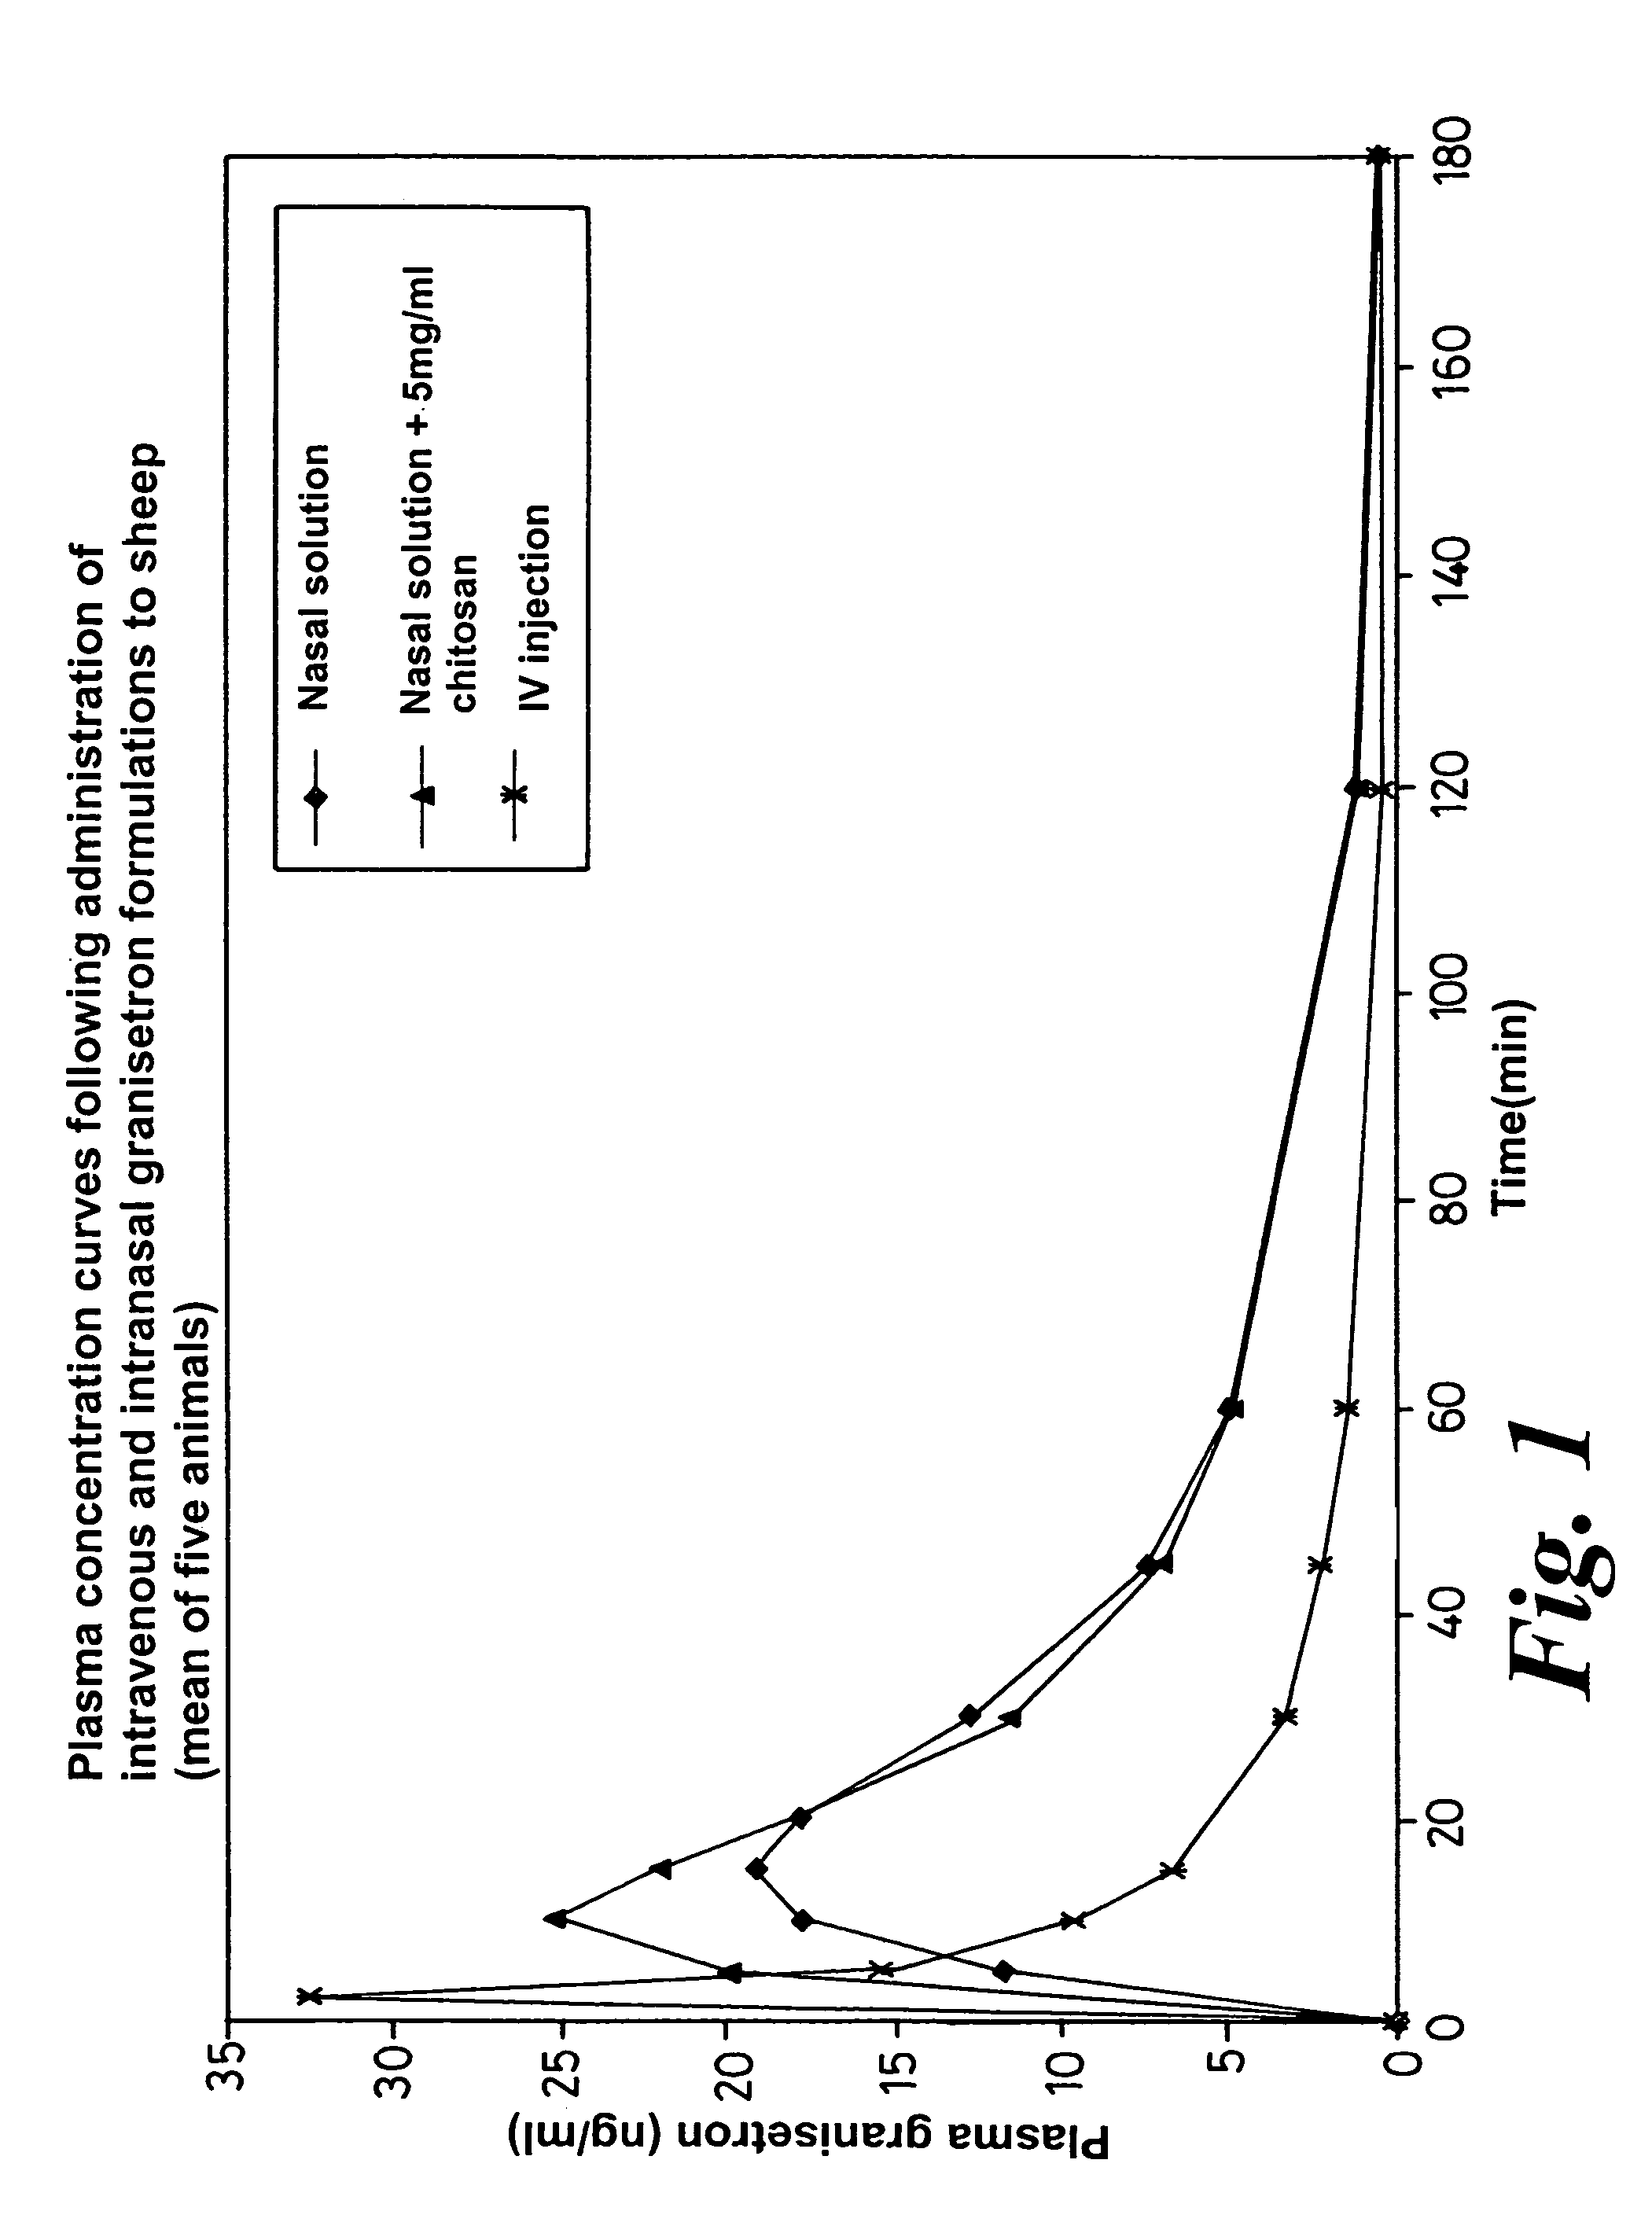 Method of intranasal administration of granisetron